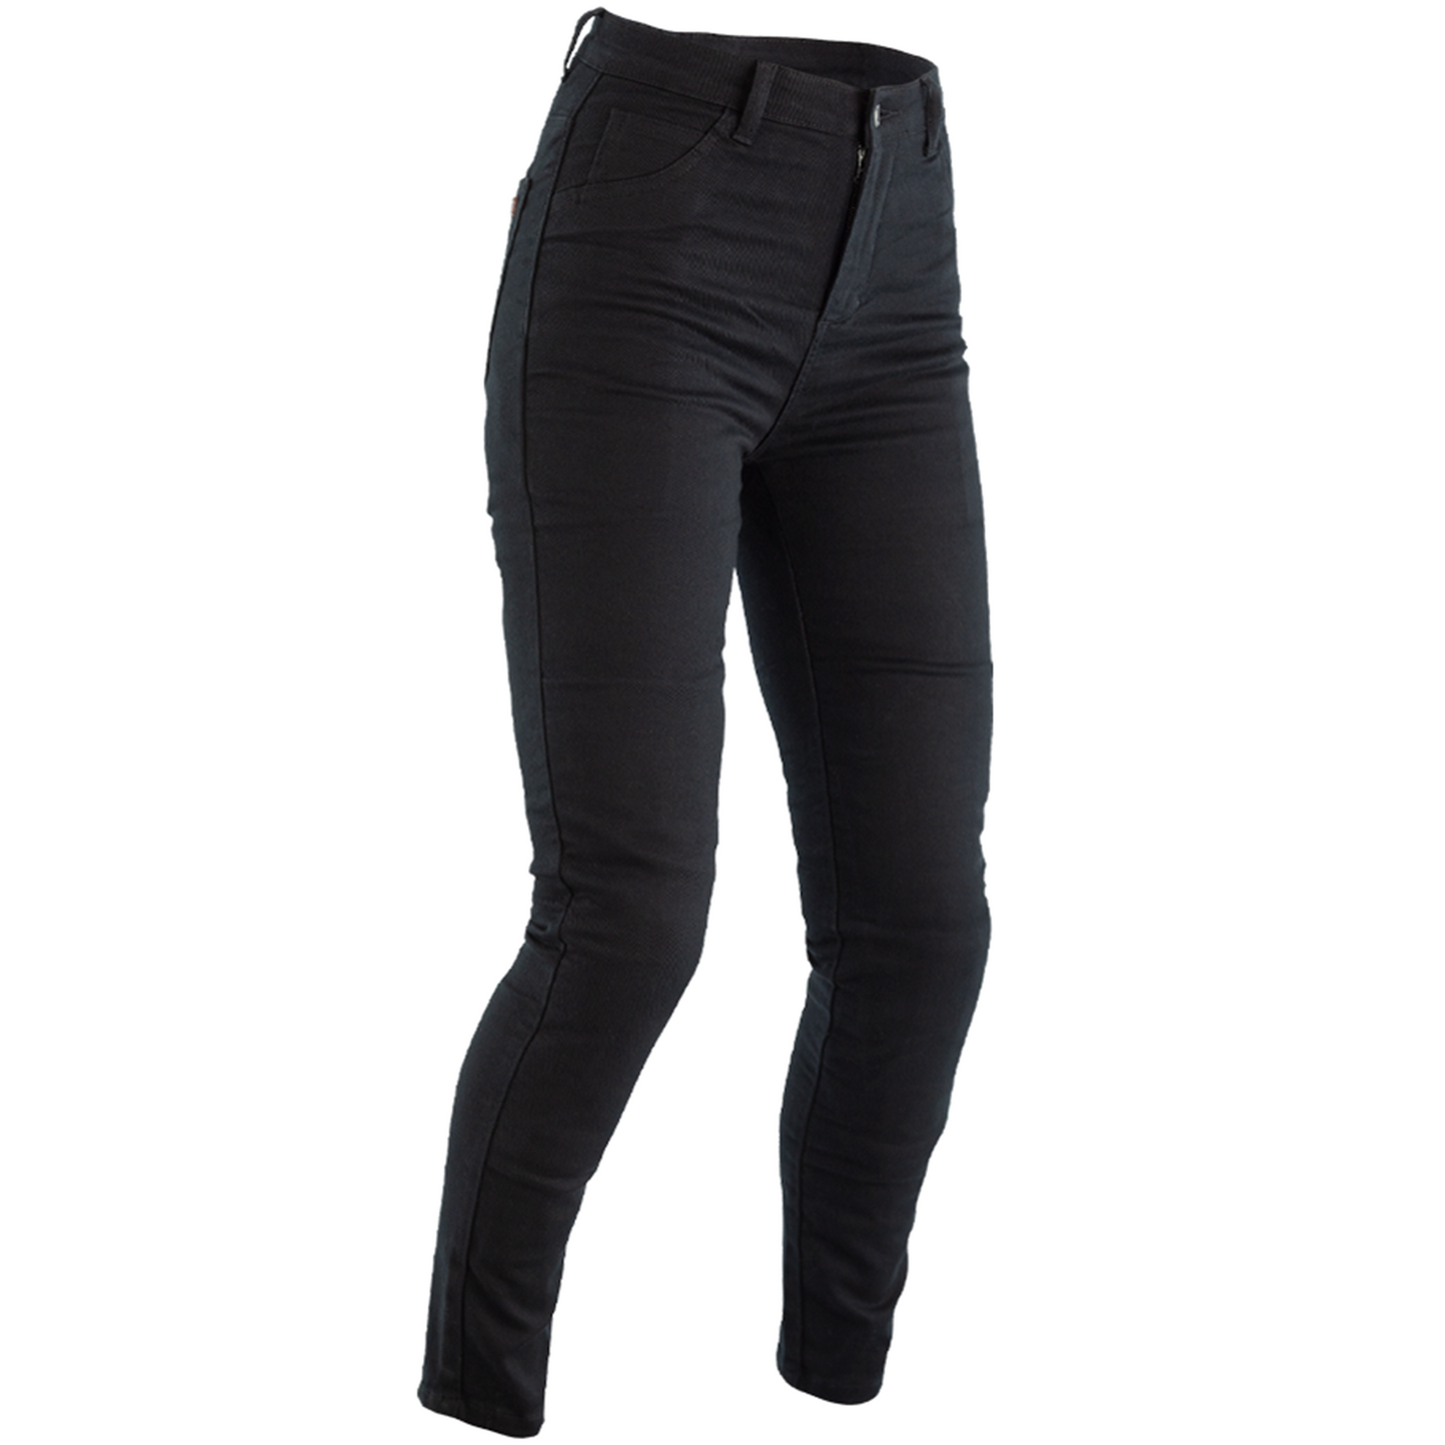 RST Reinforced Jegging CE Ladies Textile Jeans - Black Twill